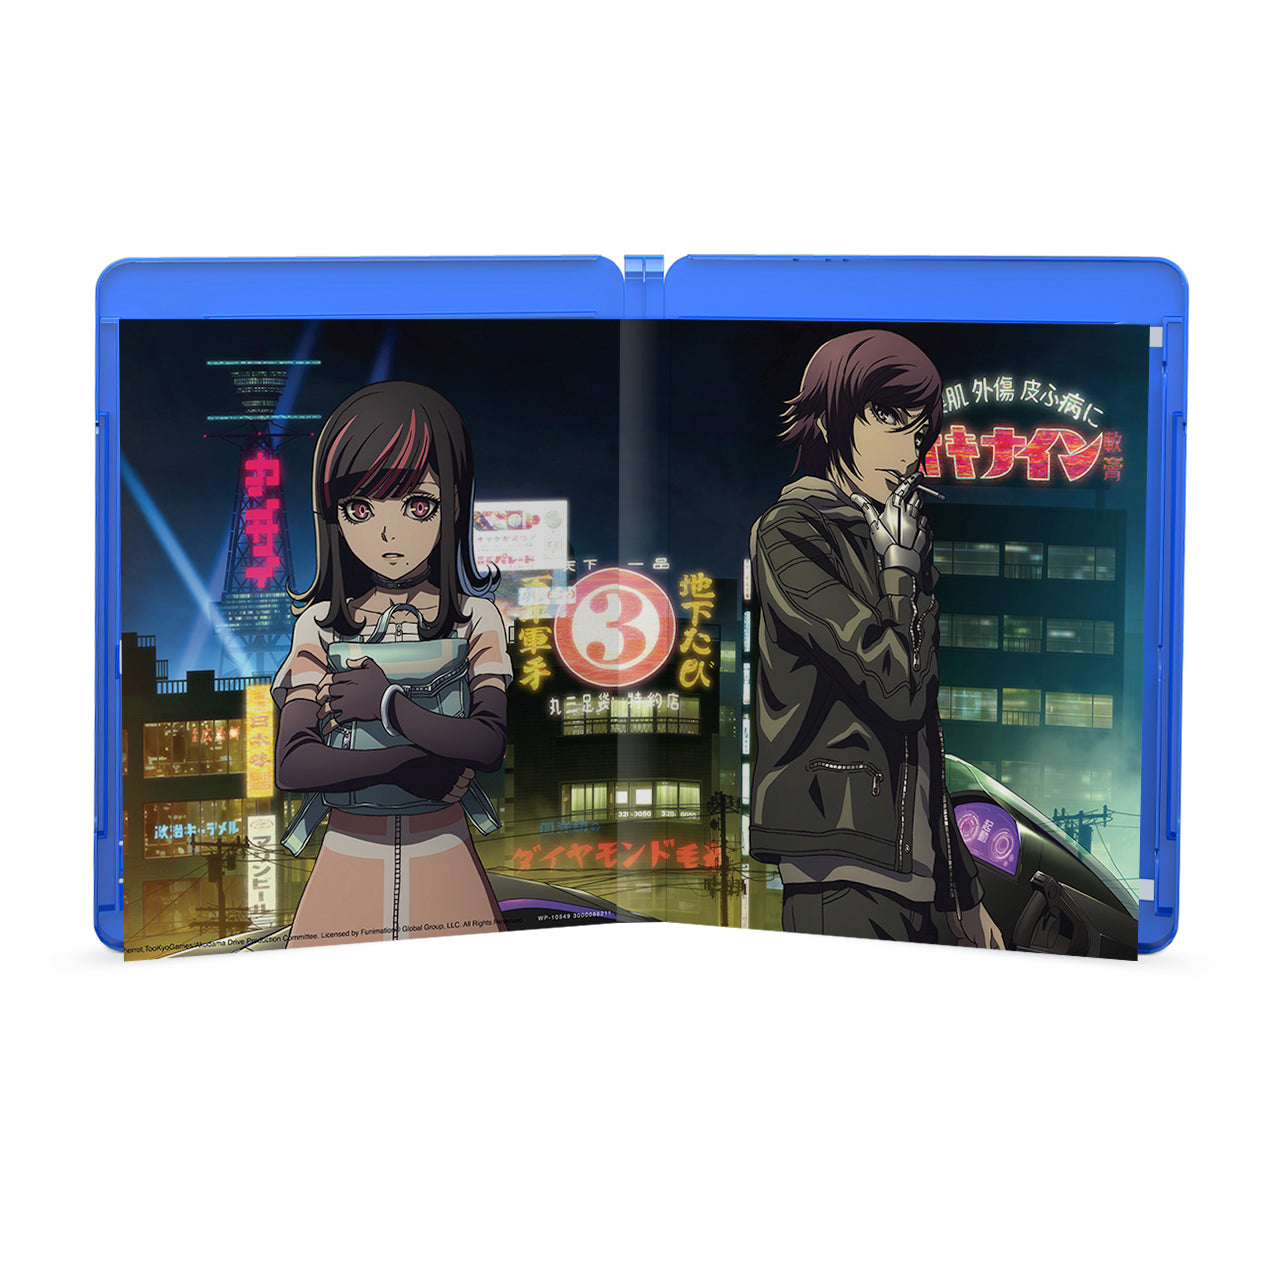 Akudama Drive - The Complete Season - Limited Edition - Blu-ray + DVD image count 4